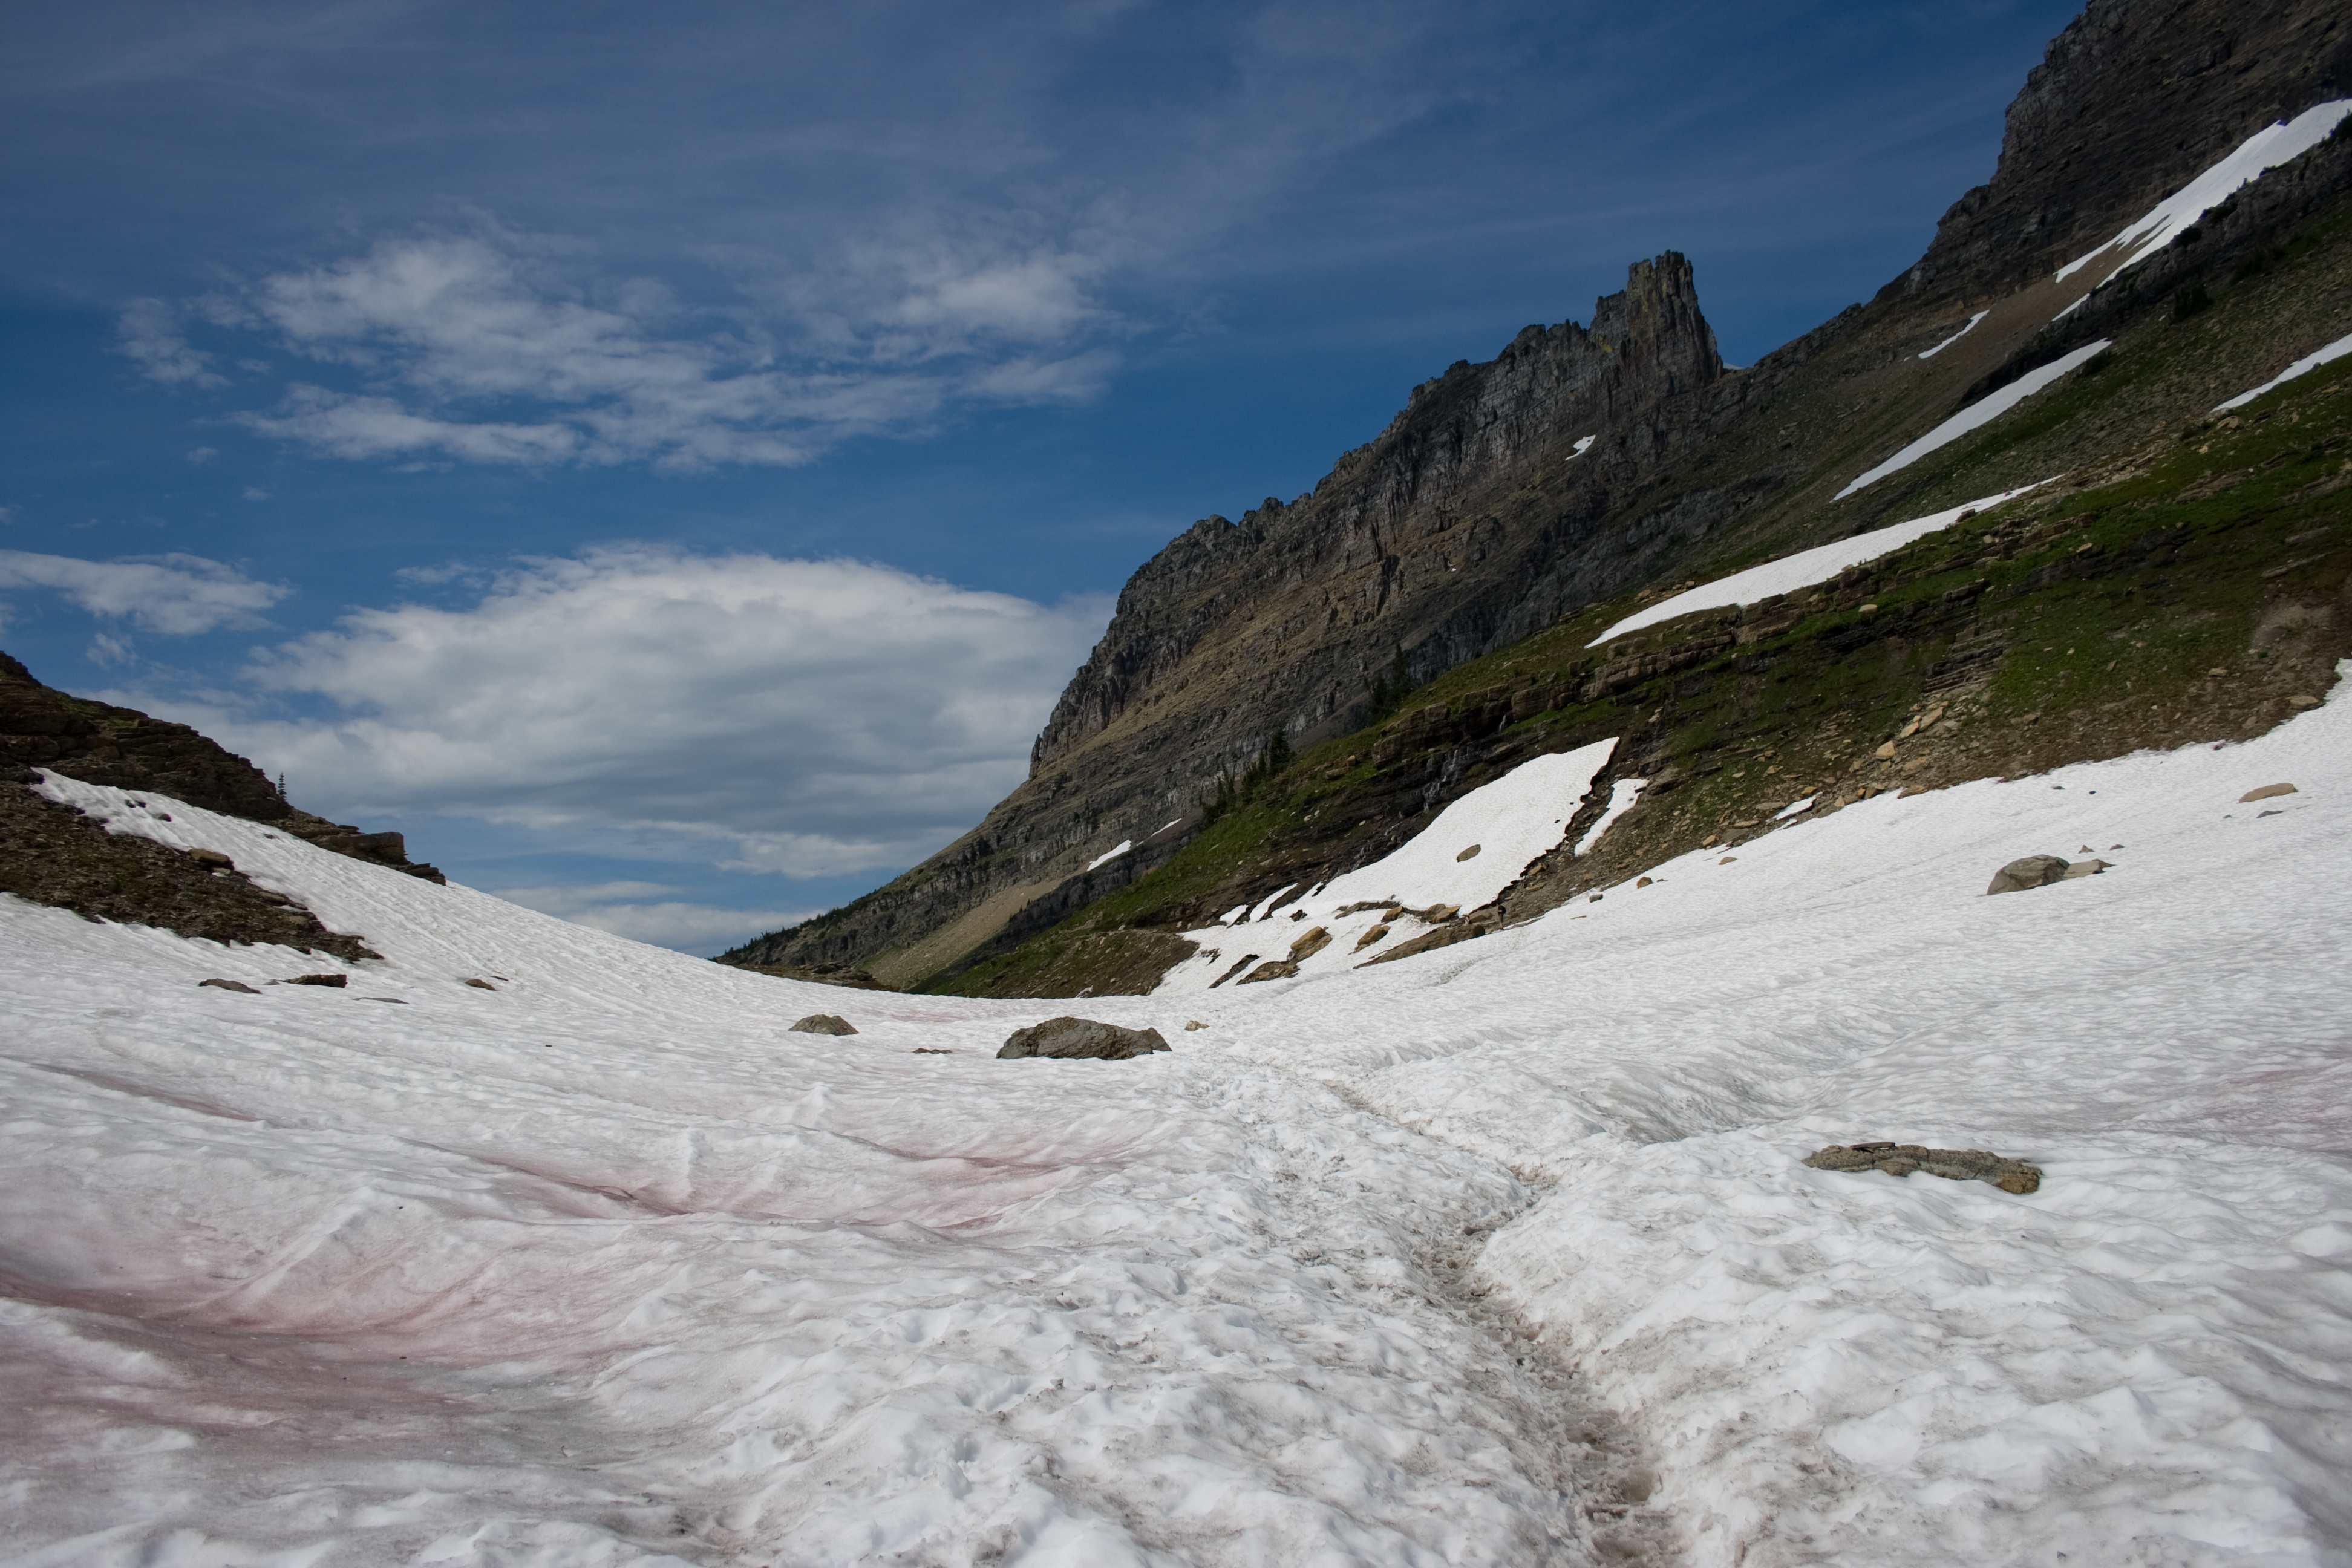 File:Glacier National Park - Snow Fields.jpg - Wikimedia Commons